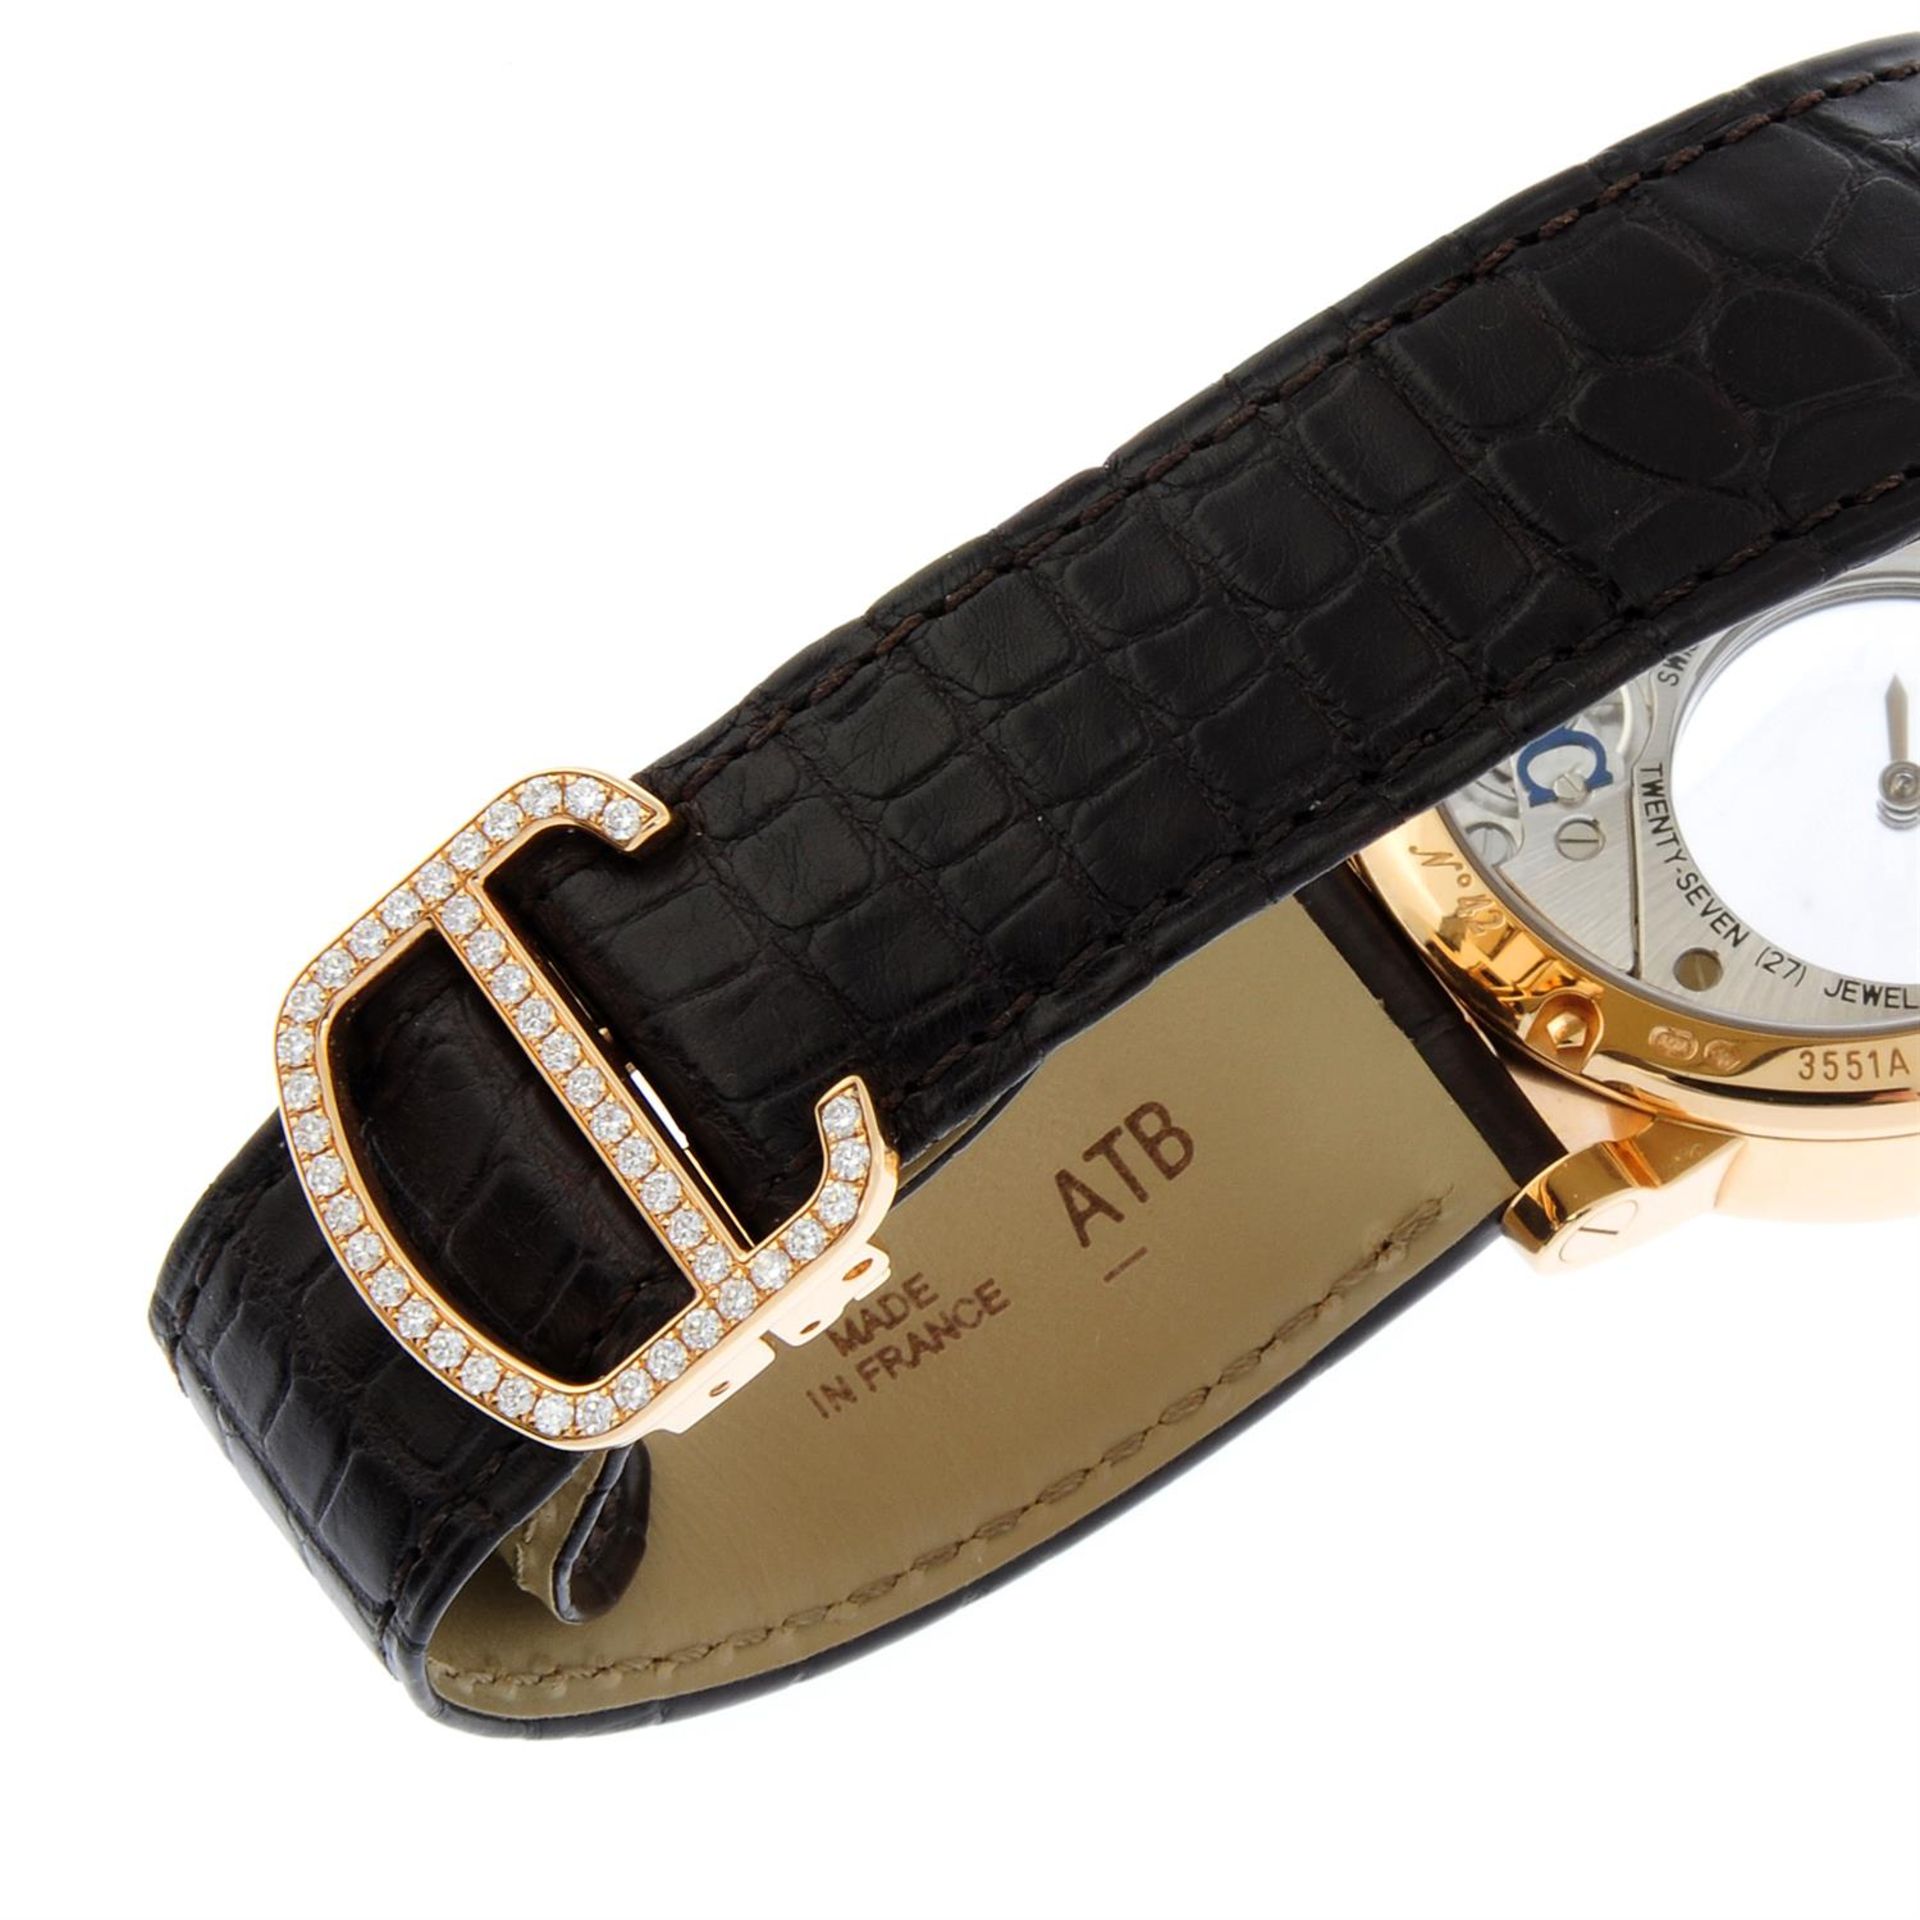 CARTIER - an 18ct rose gold Rotonde de Cartier Mystérieuse wrist watch, 42mm. - Image 2 of 7